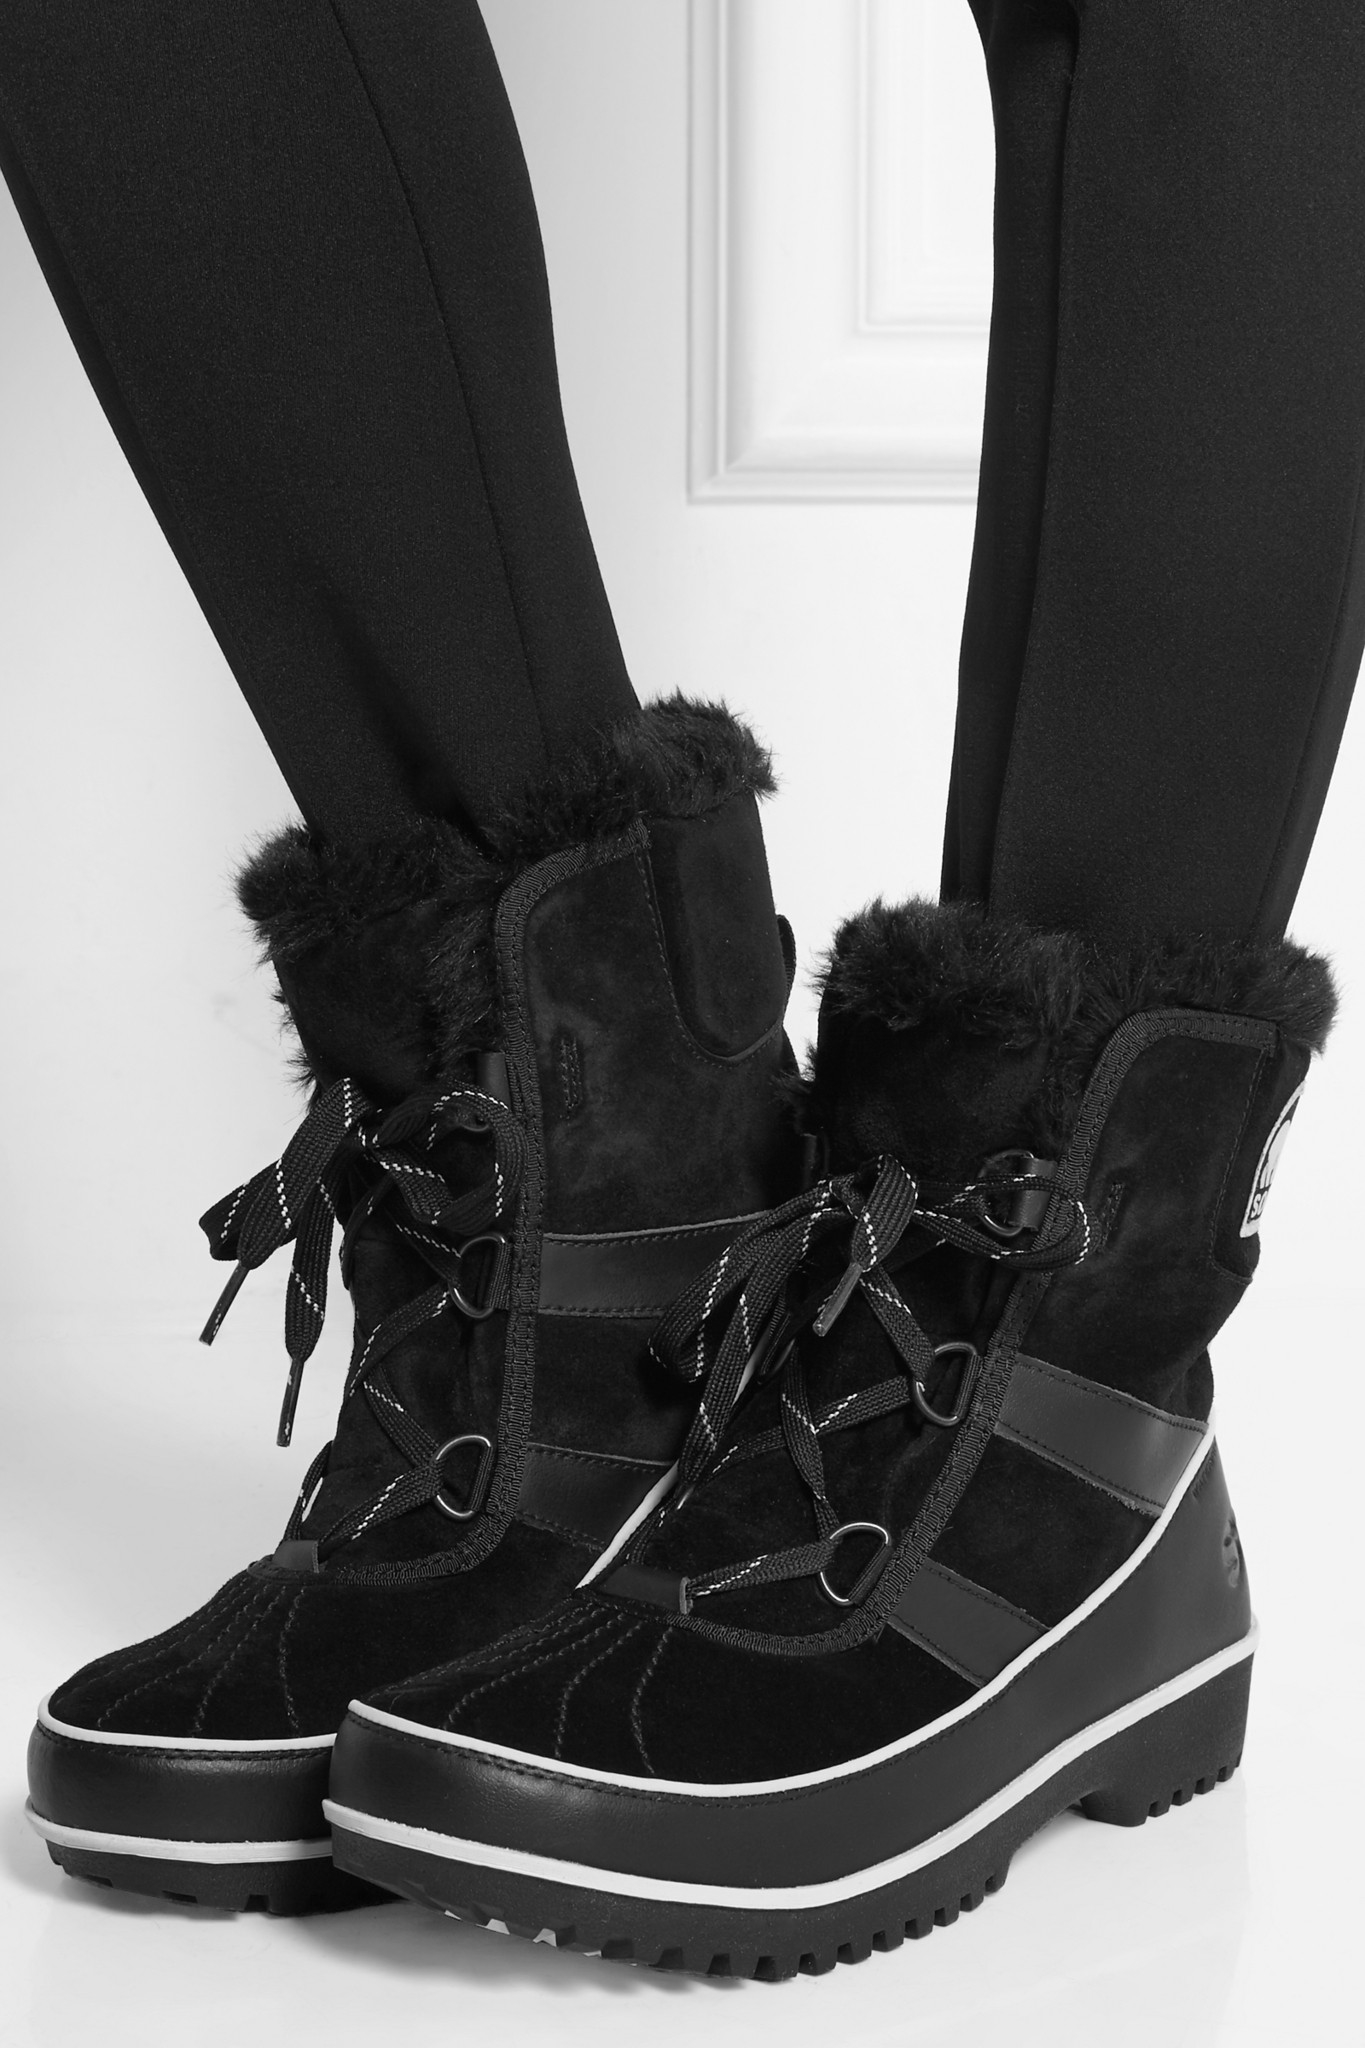 sorel women's tivoli ii winter boots